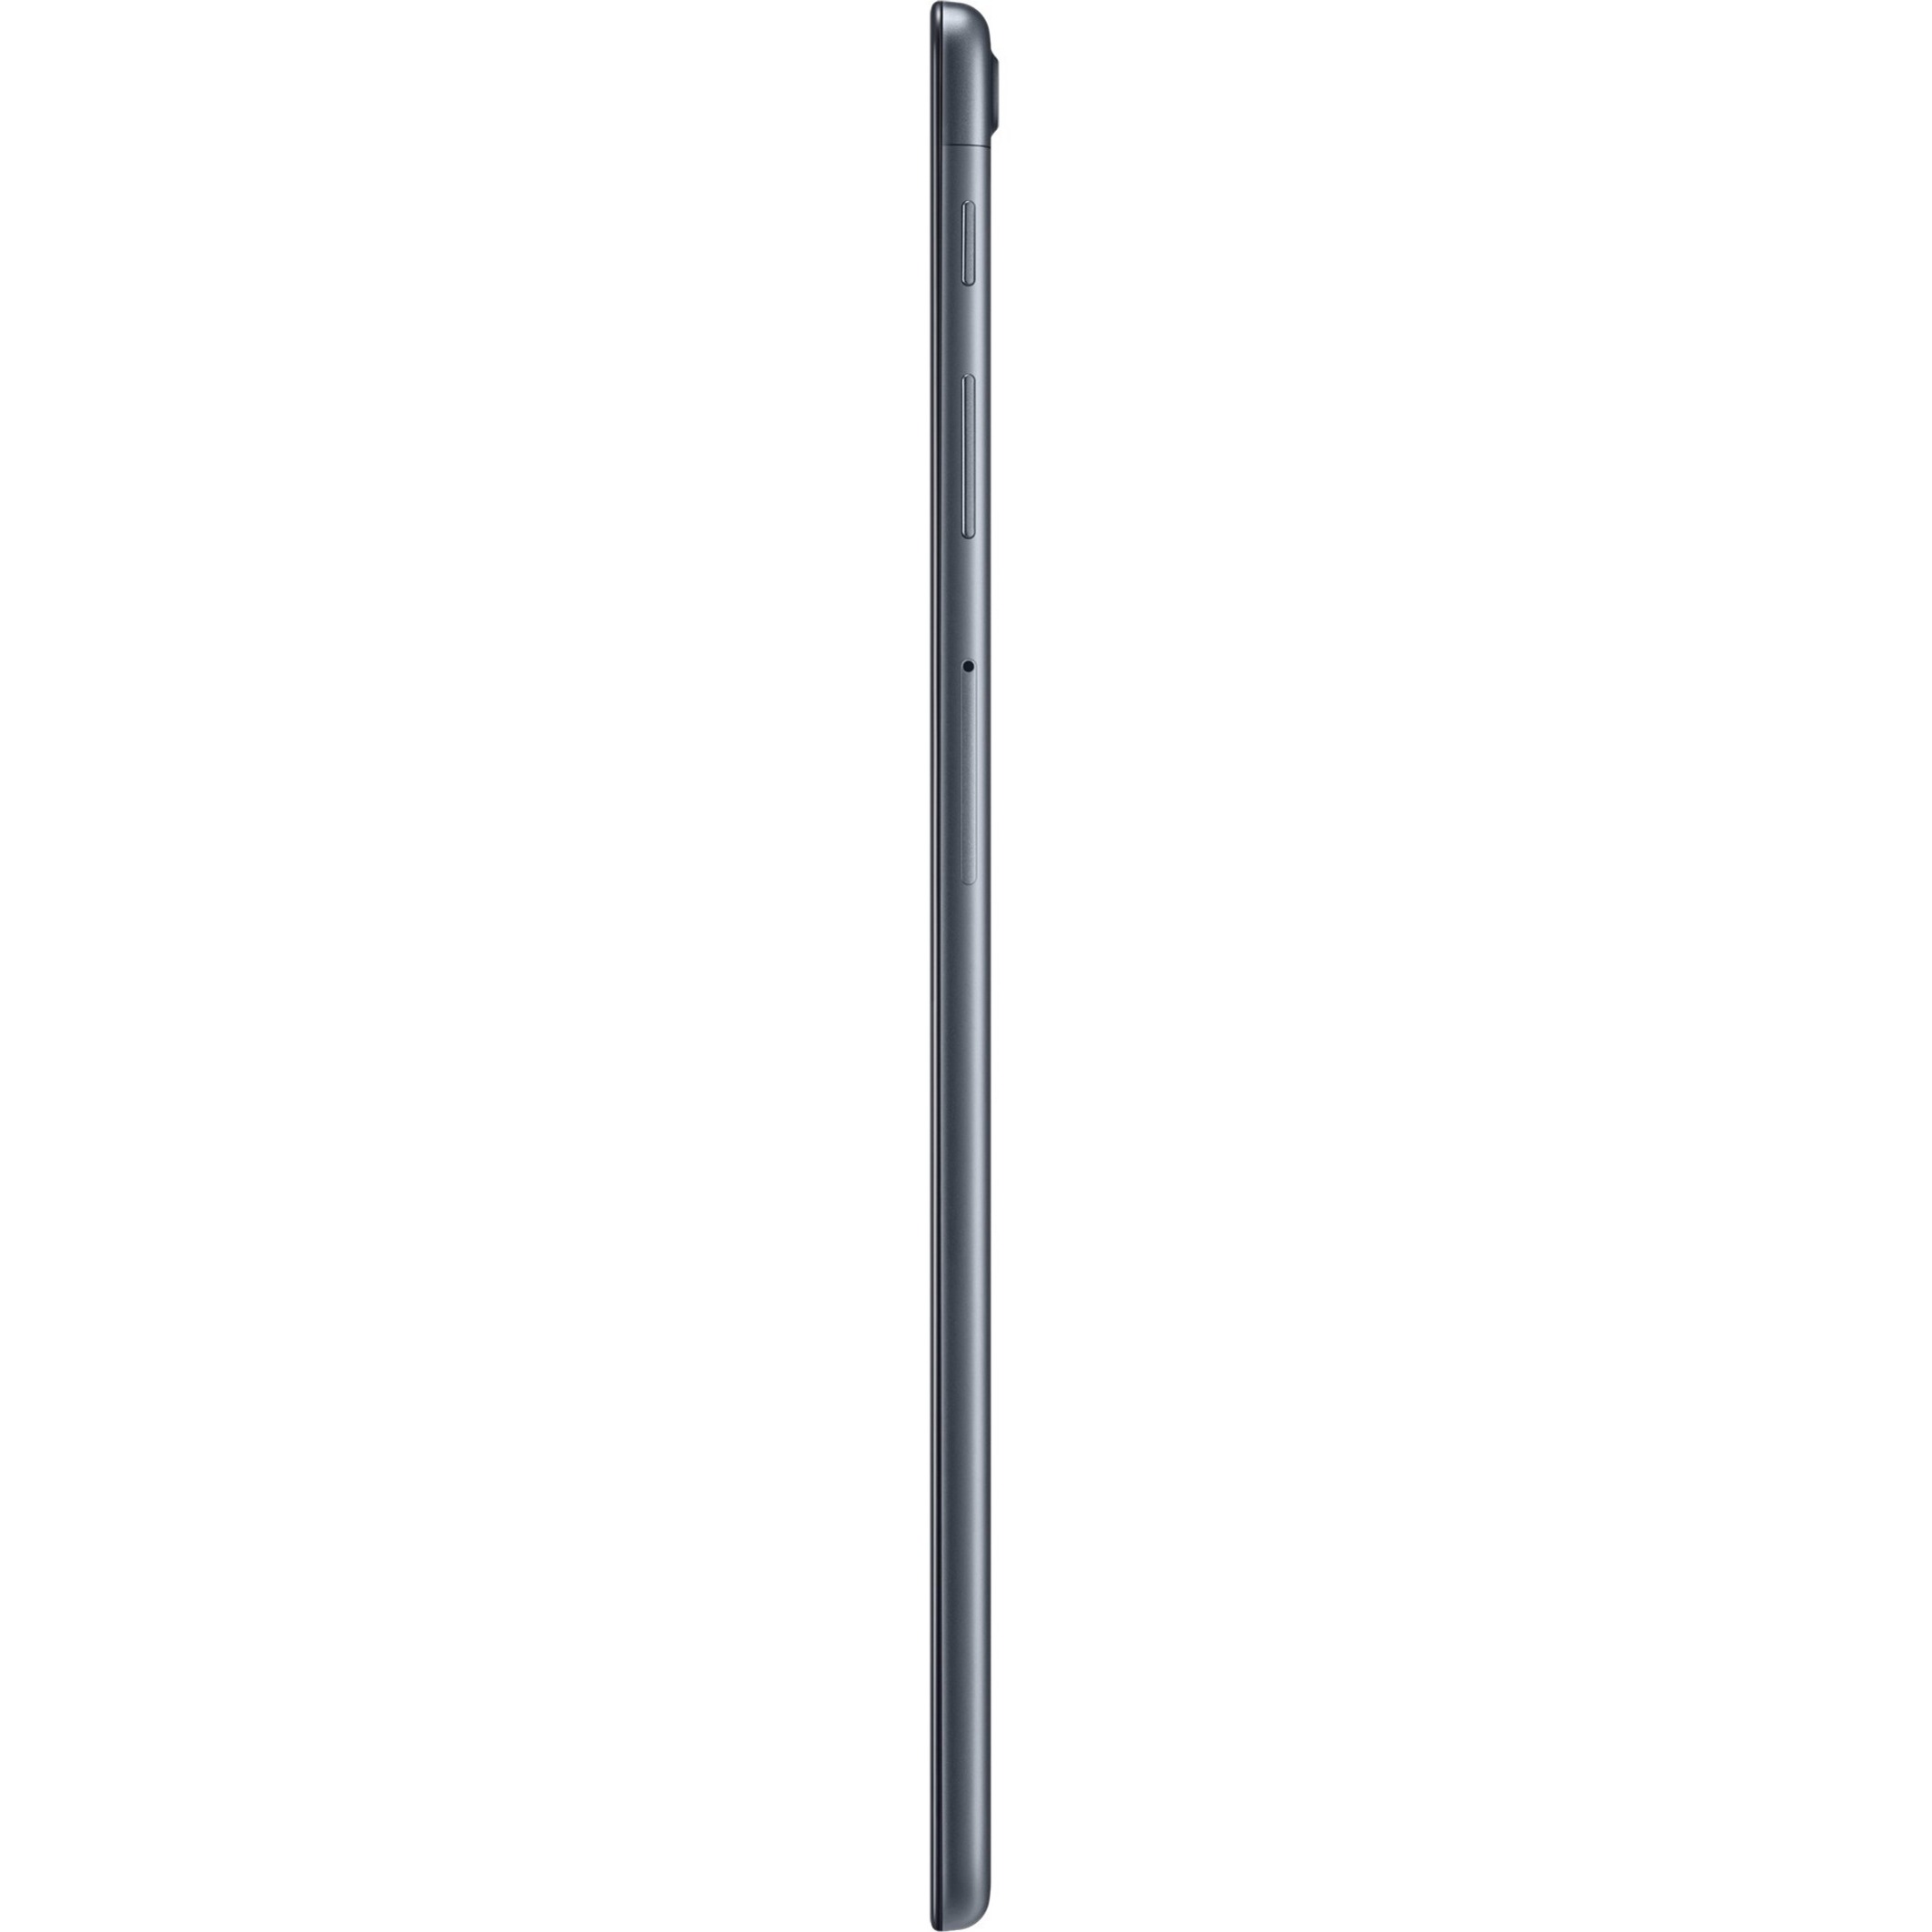 Samsung Galaxy Tab A 10.1 128 GB Wifi Tablet Gold (2019) - image 2 of 20